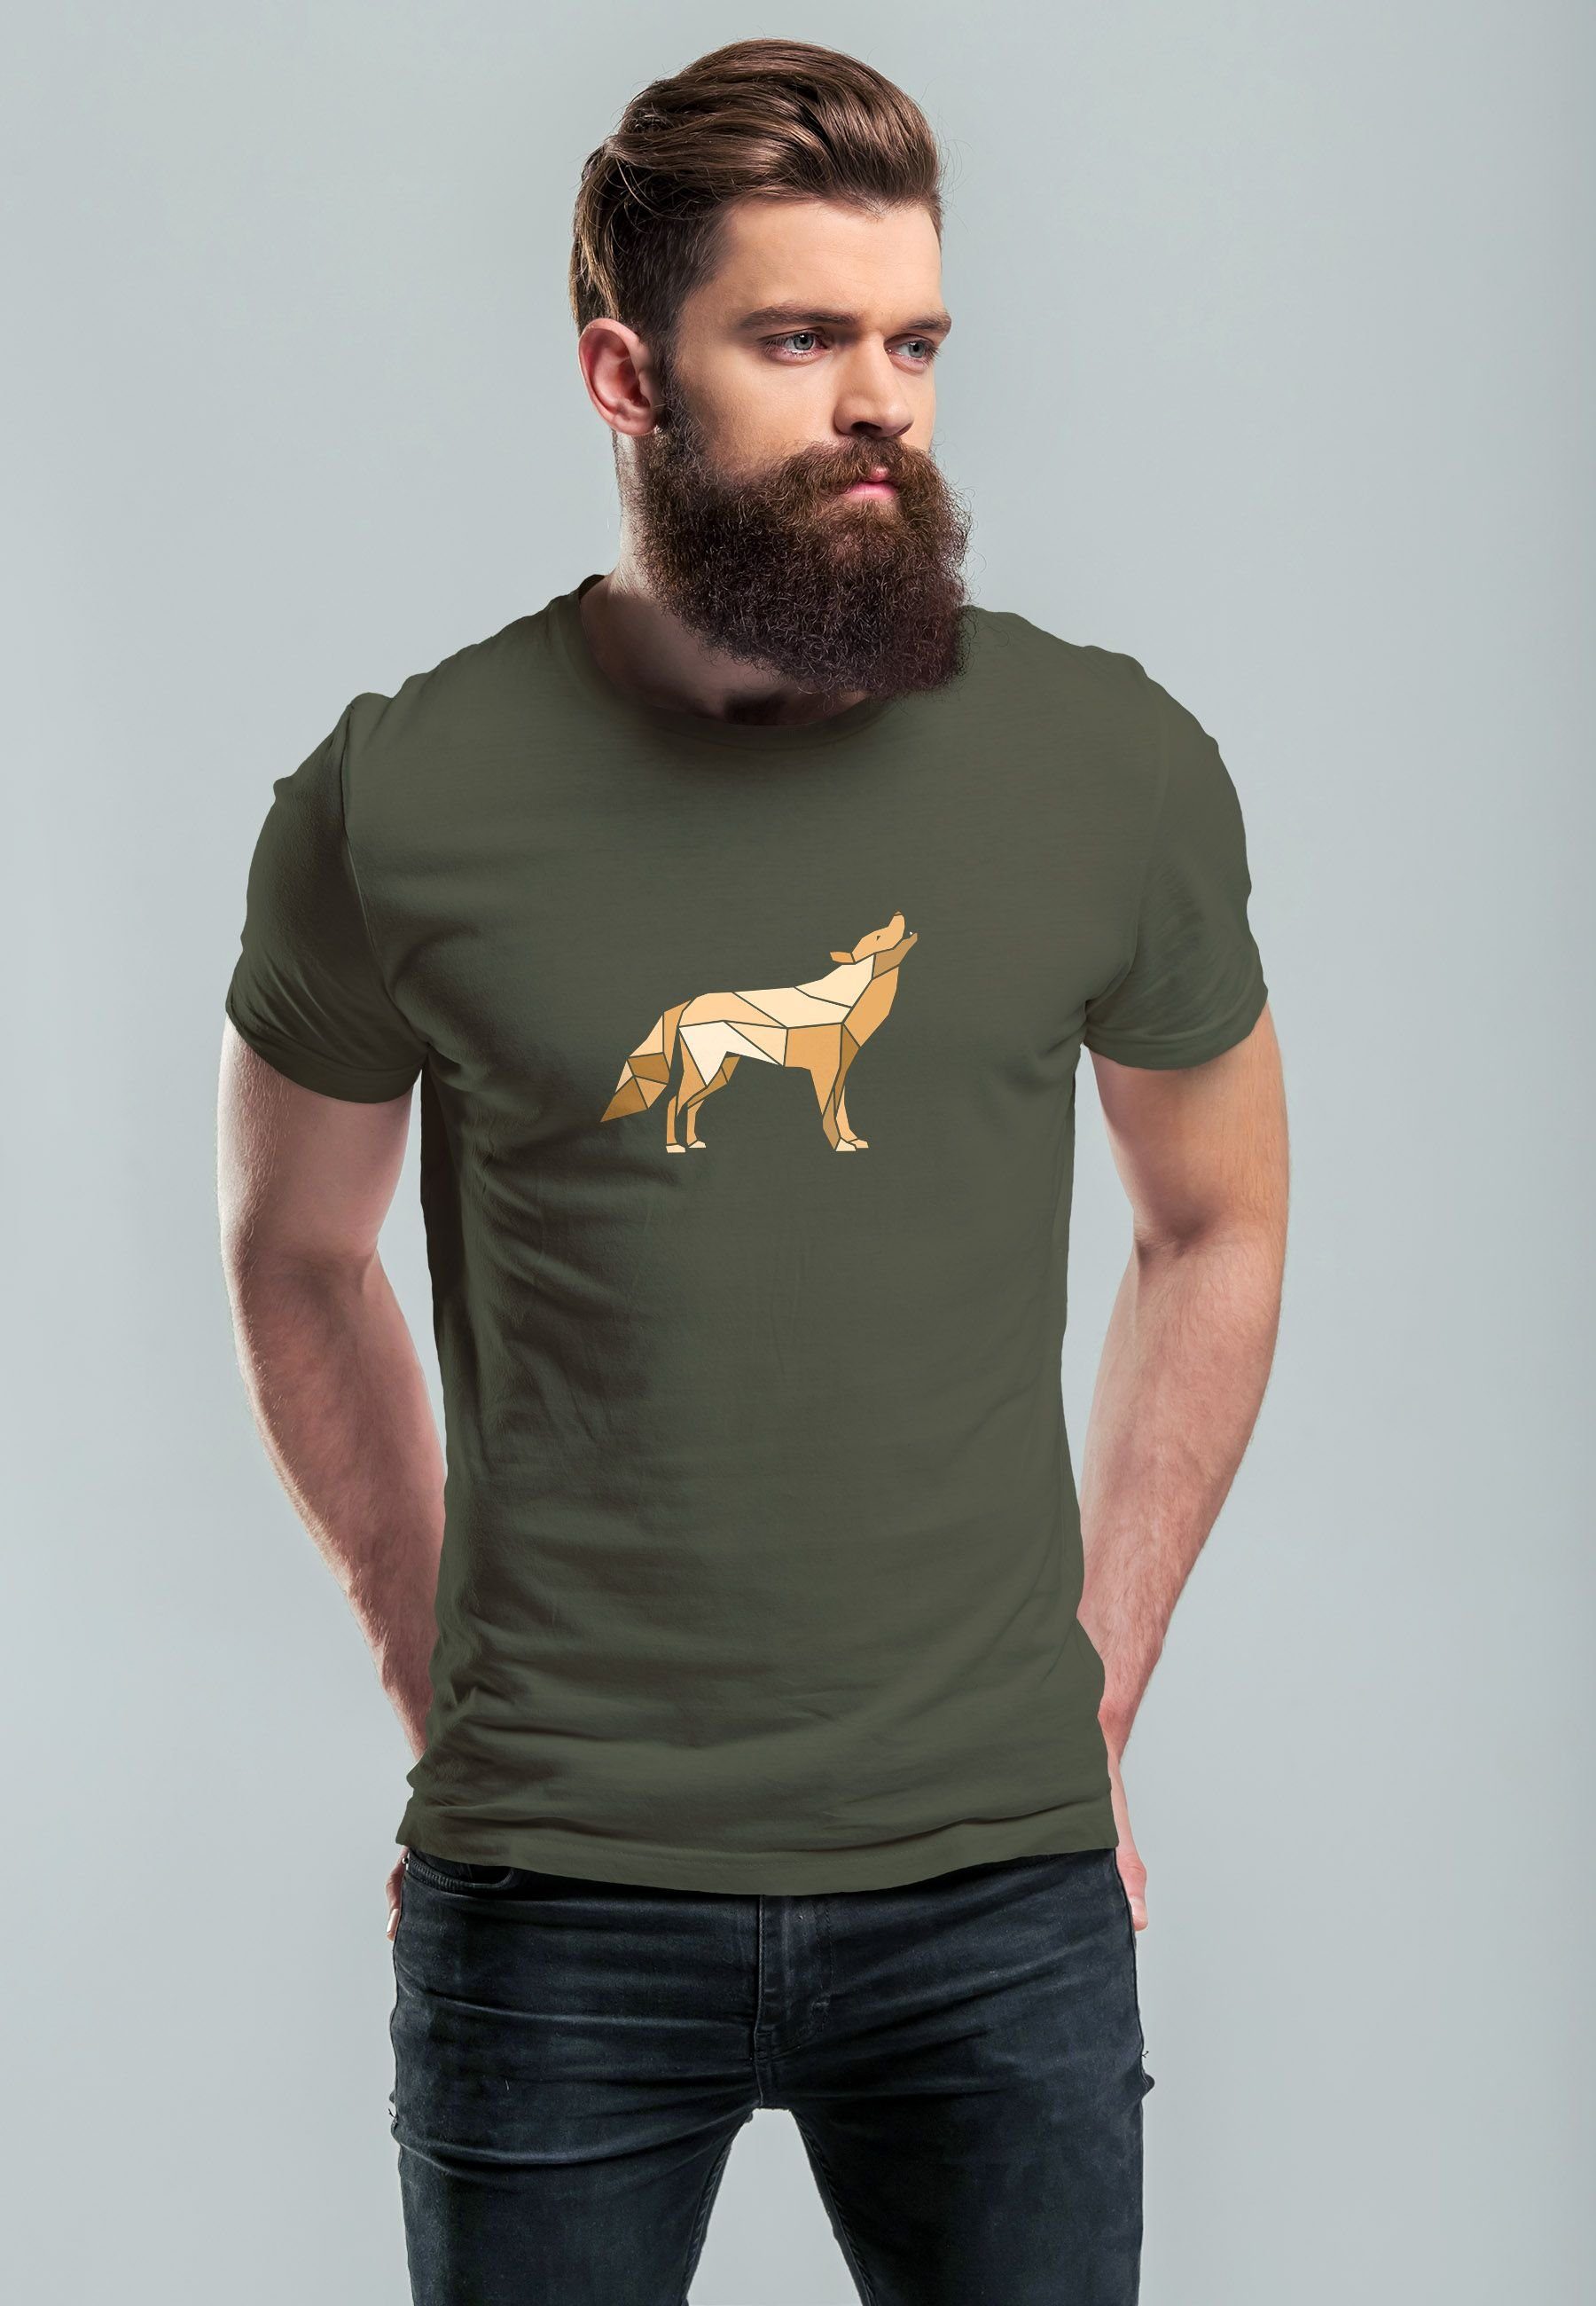 Neverless Print-Shirt Herren Tiermotiv army Wolf Print Fashion T-Shirt Bedruckt mit Grafik Outdoor Polygon